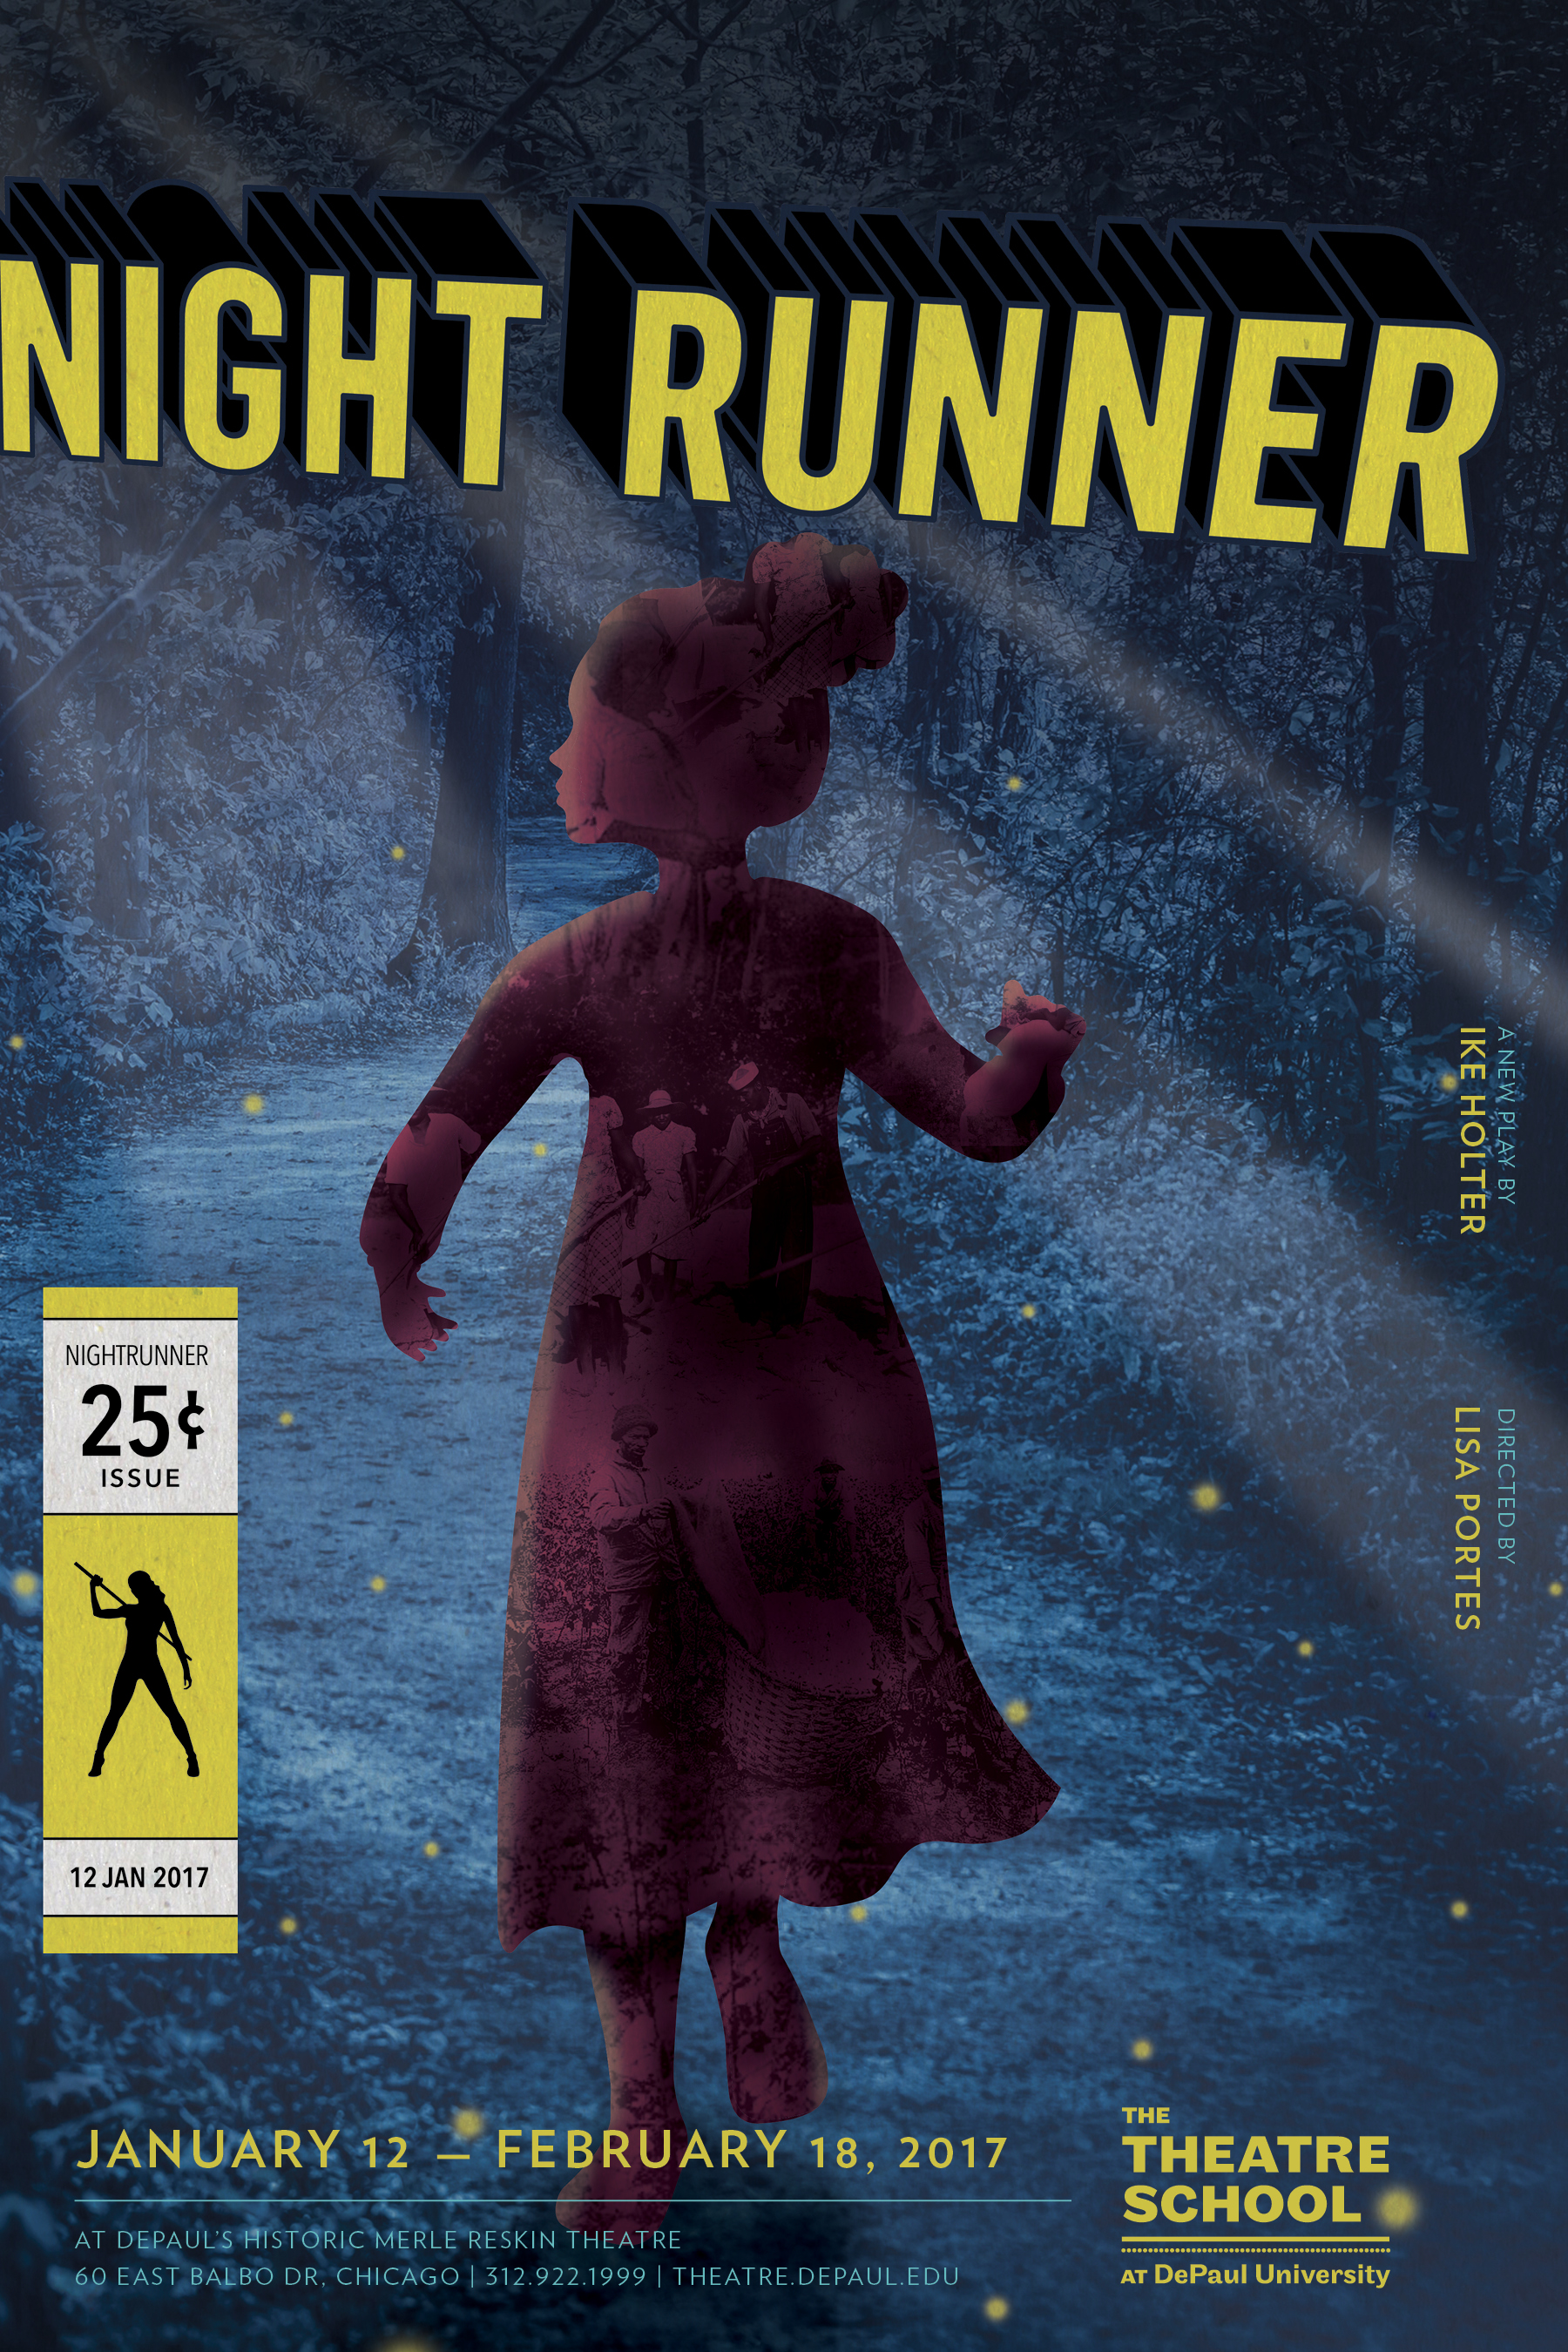 Night Runner postcard